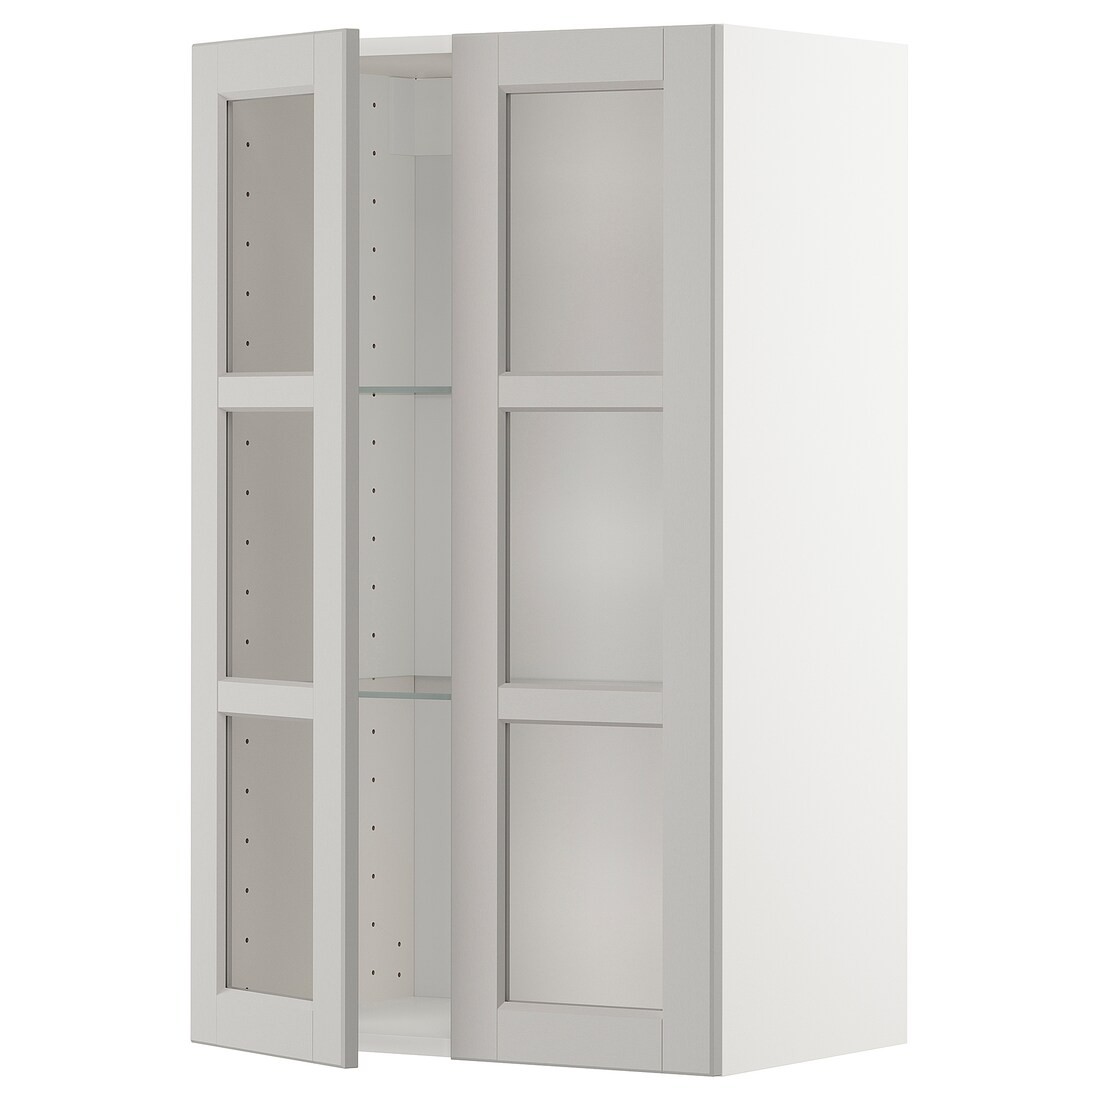 METOD МЕТОД Навесной шкаф, белый / Lerhyttan светло-серый, 60x100 см